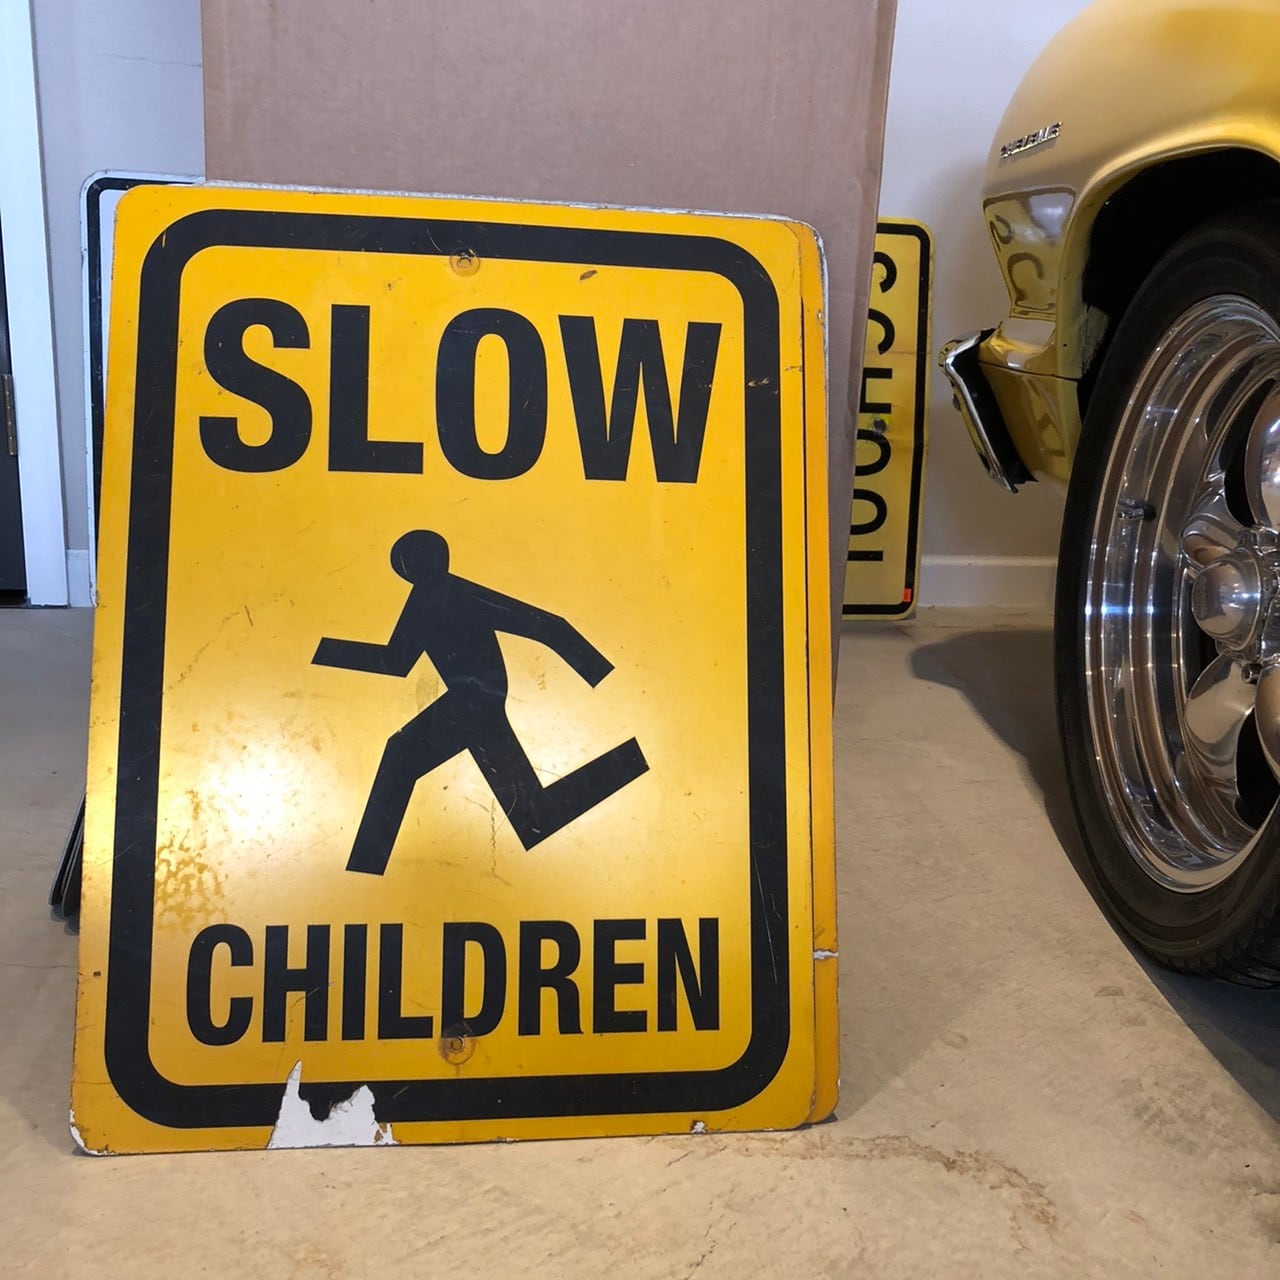 Slow children 2　アメリカンロードサイン　トラフィックサイン　道路標識 | Y&market powered by BASE